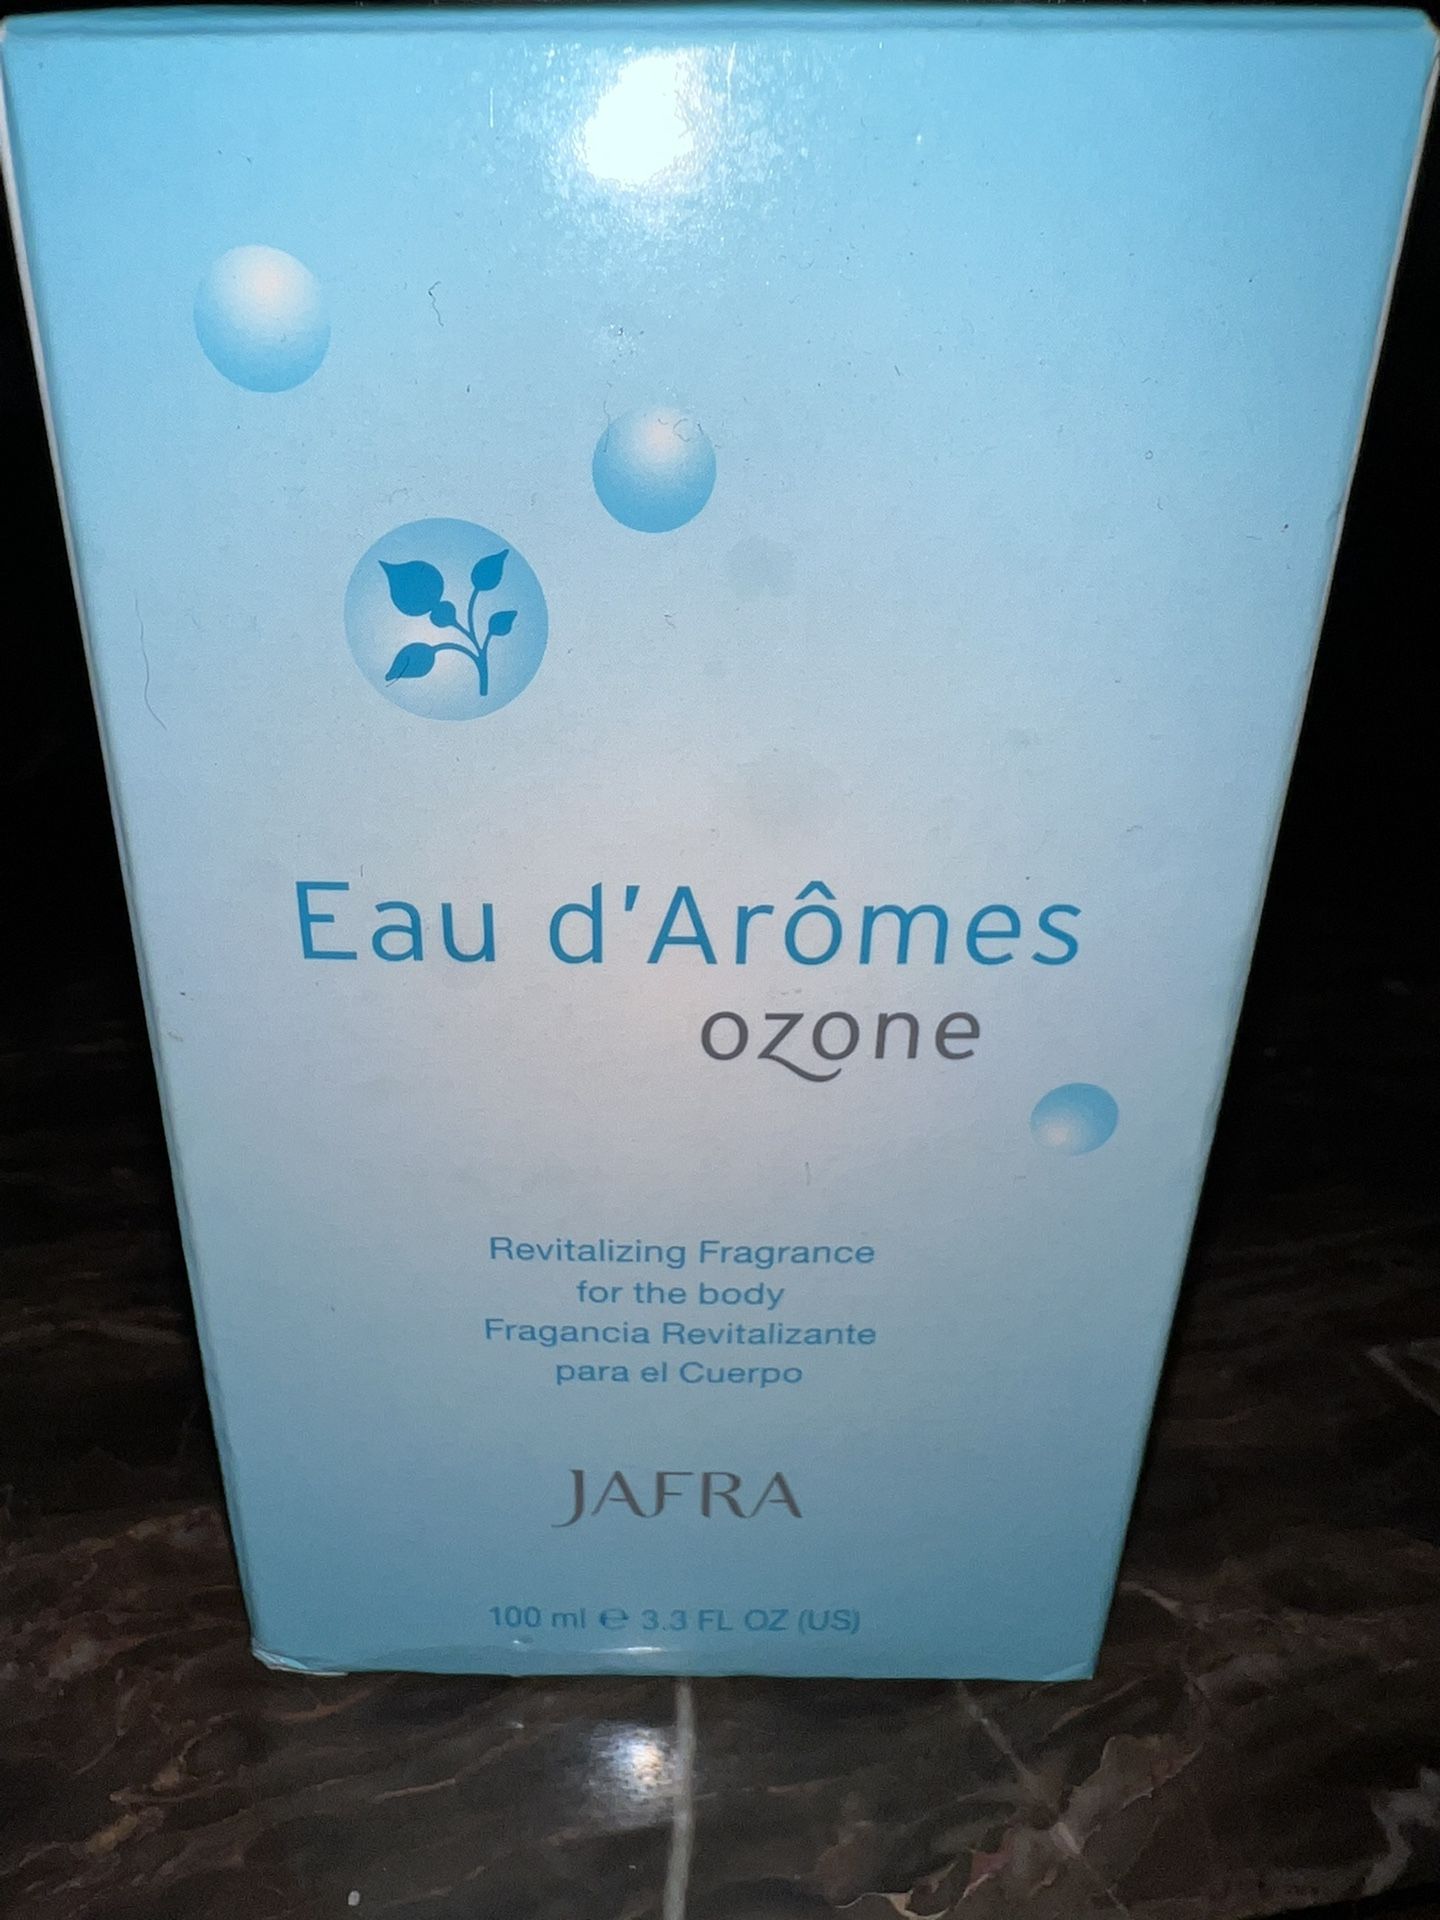 Jafra Eau d'Aromes Ozone Revitalizing Fragrance 3.3oz